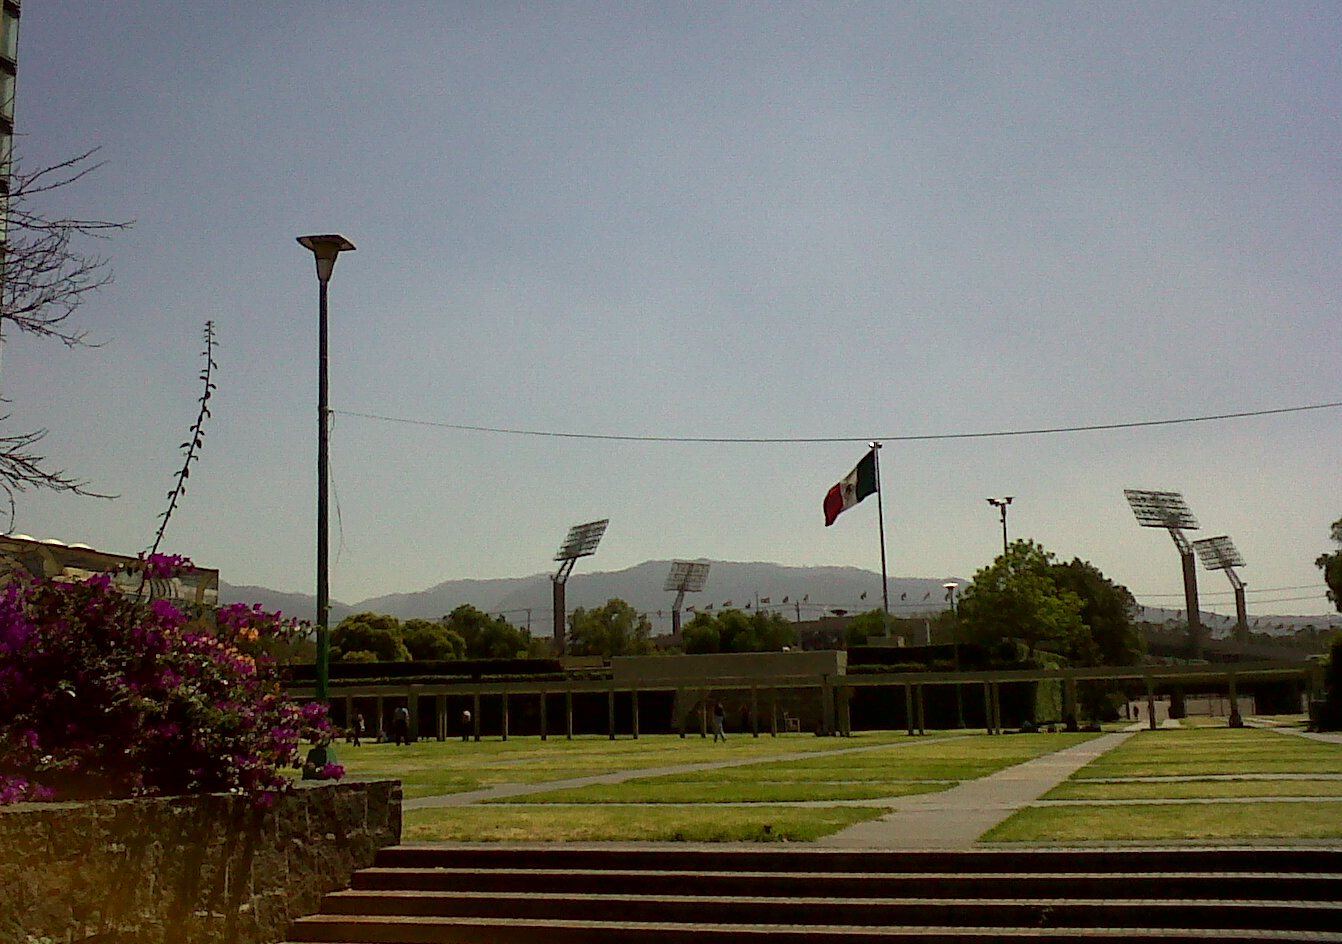 Ciudad Universitaria uñtawi, kawkhantix jan walt’awix paski ukhawa. Luririn jamuqapa, J. Tade (mayo 2012).